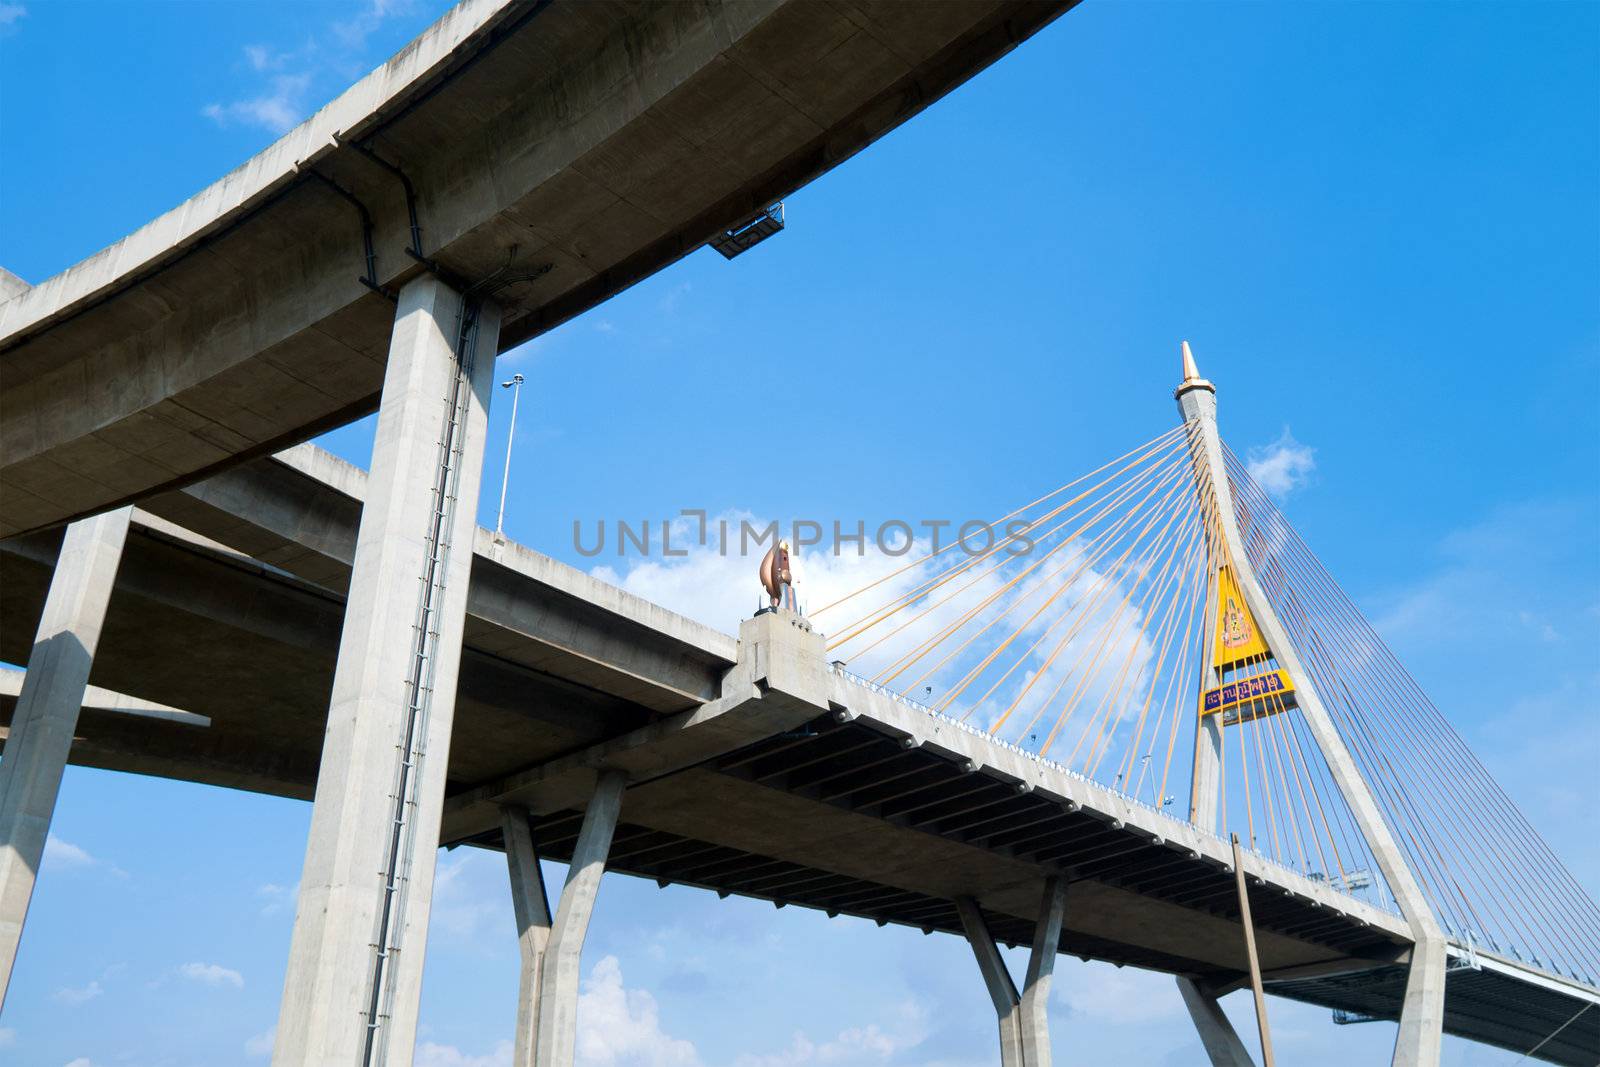 Bhumibol Bridge in Thailand,The bridge crosses the Chao Phraya R by jakgree